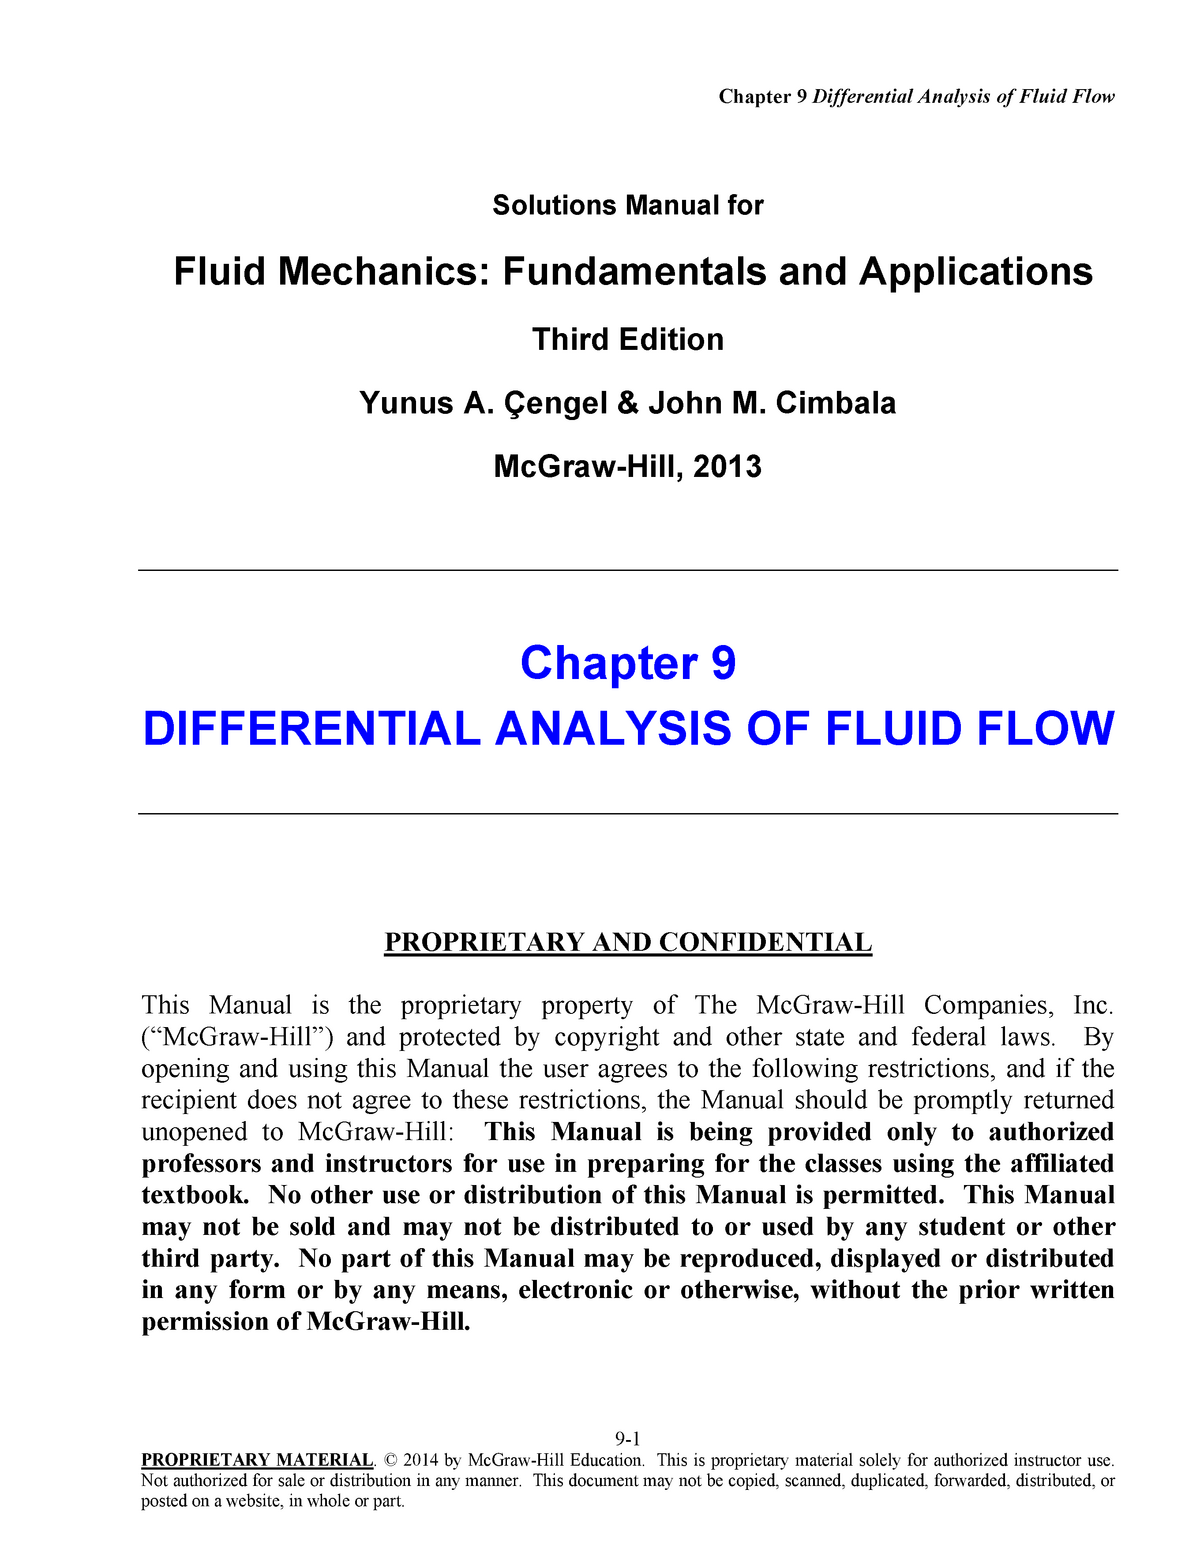 fluid mechanics research papers pdf